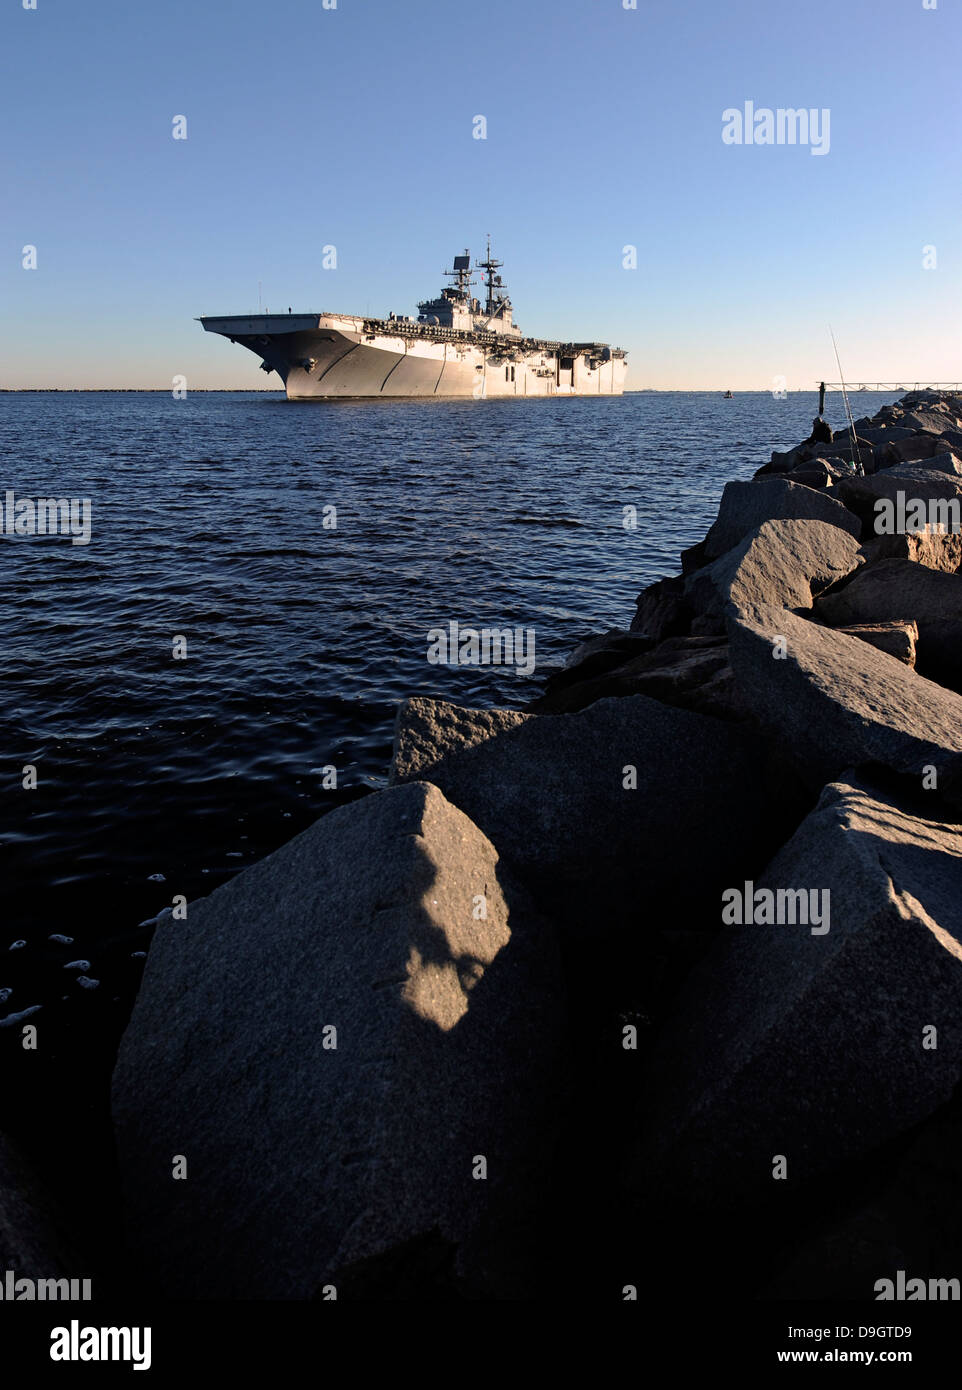 2 novembre 2012 - multipurpose Amphibious Assault nave USS Bataan (LHD 5) arriva alla stazione navale Mayport, Florida. Foto Stock